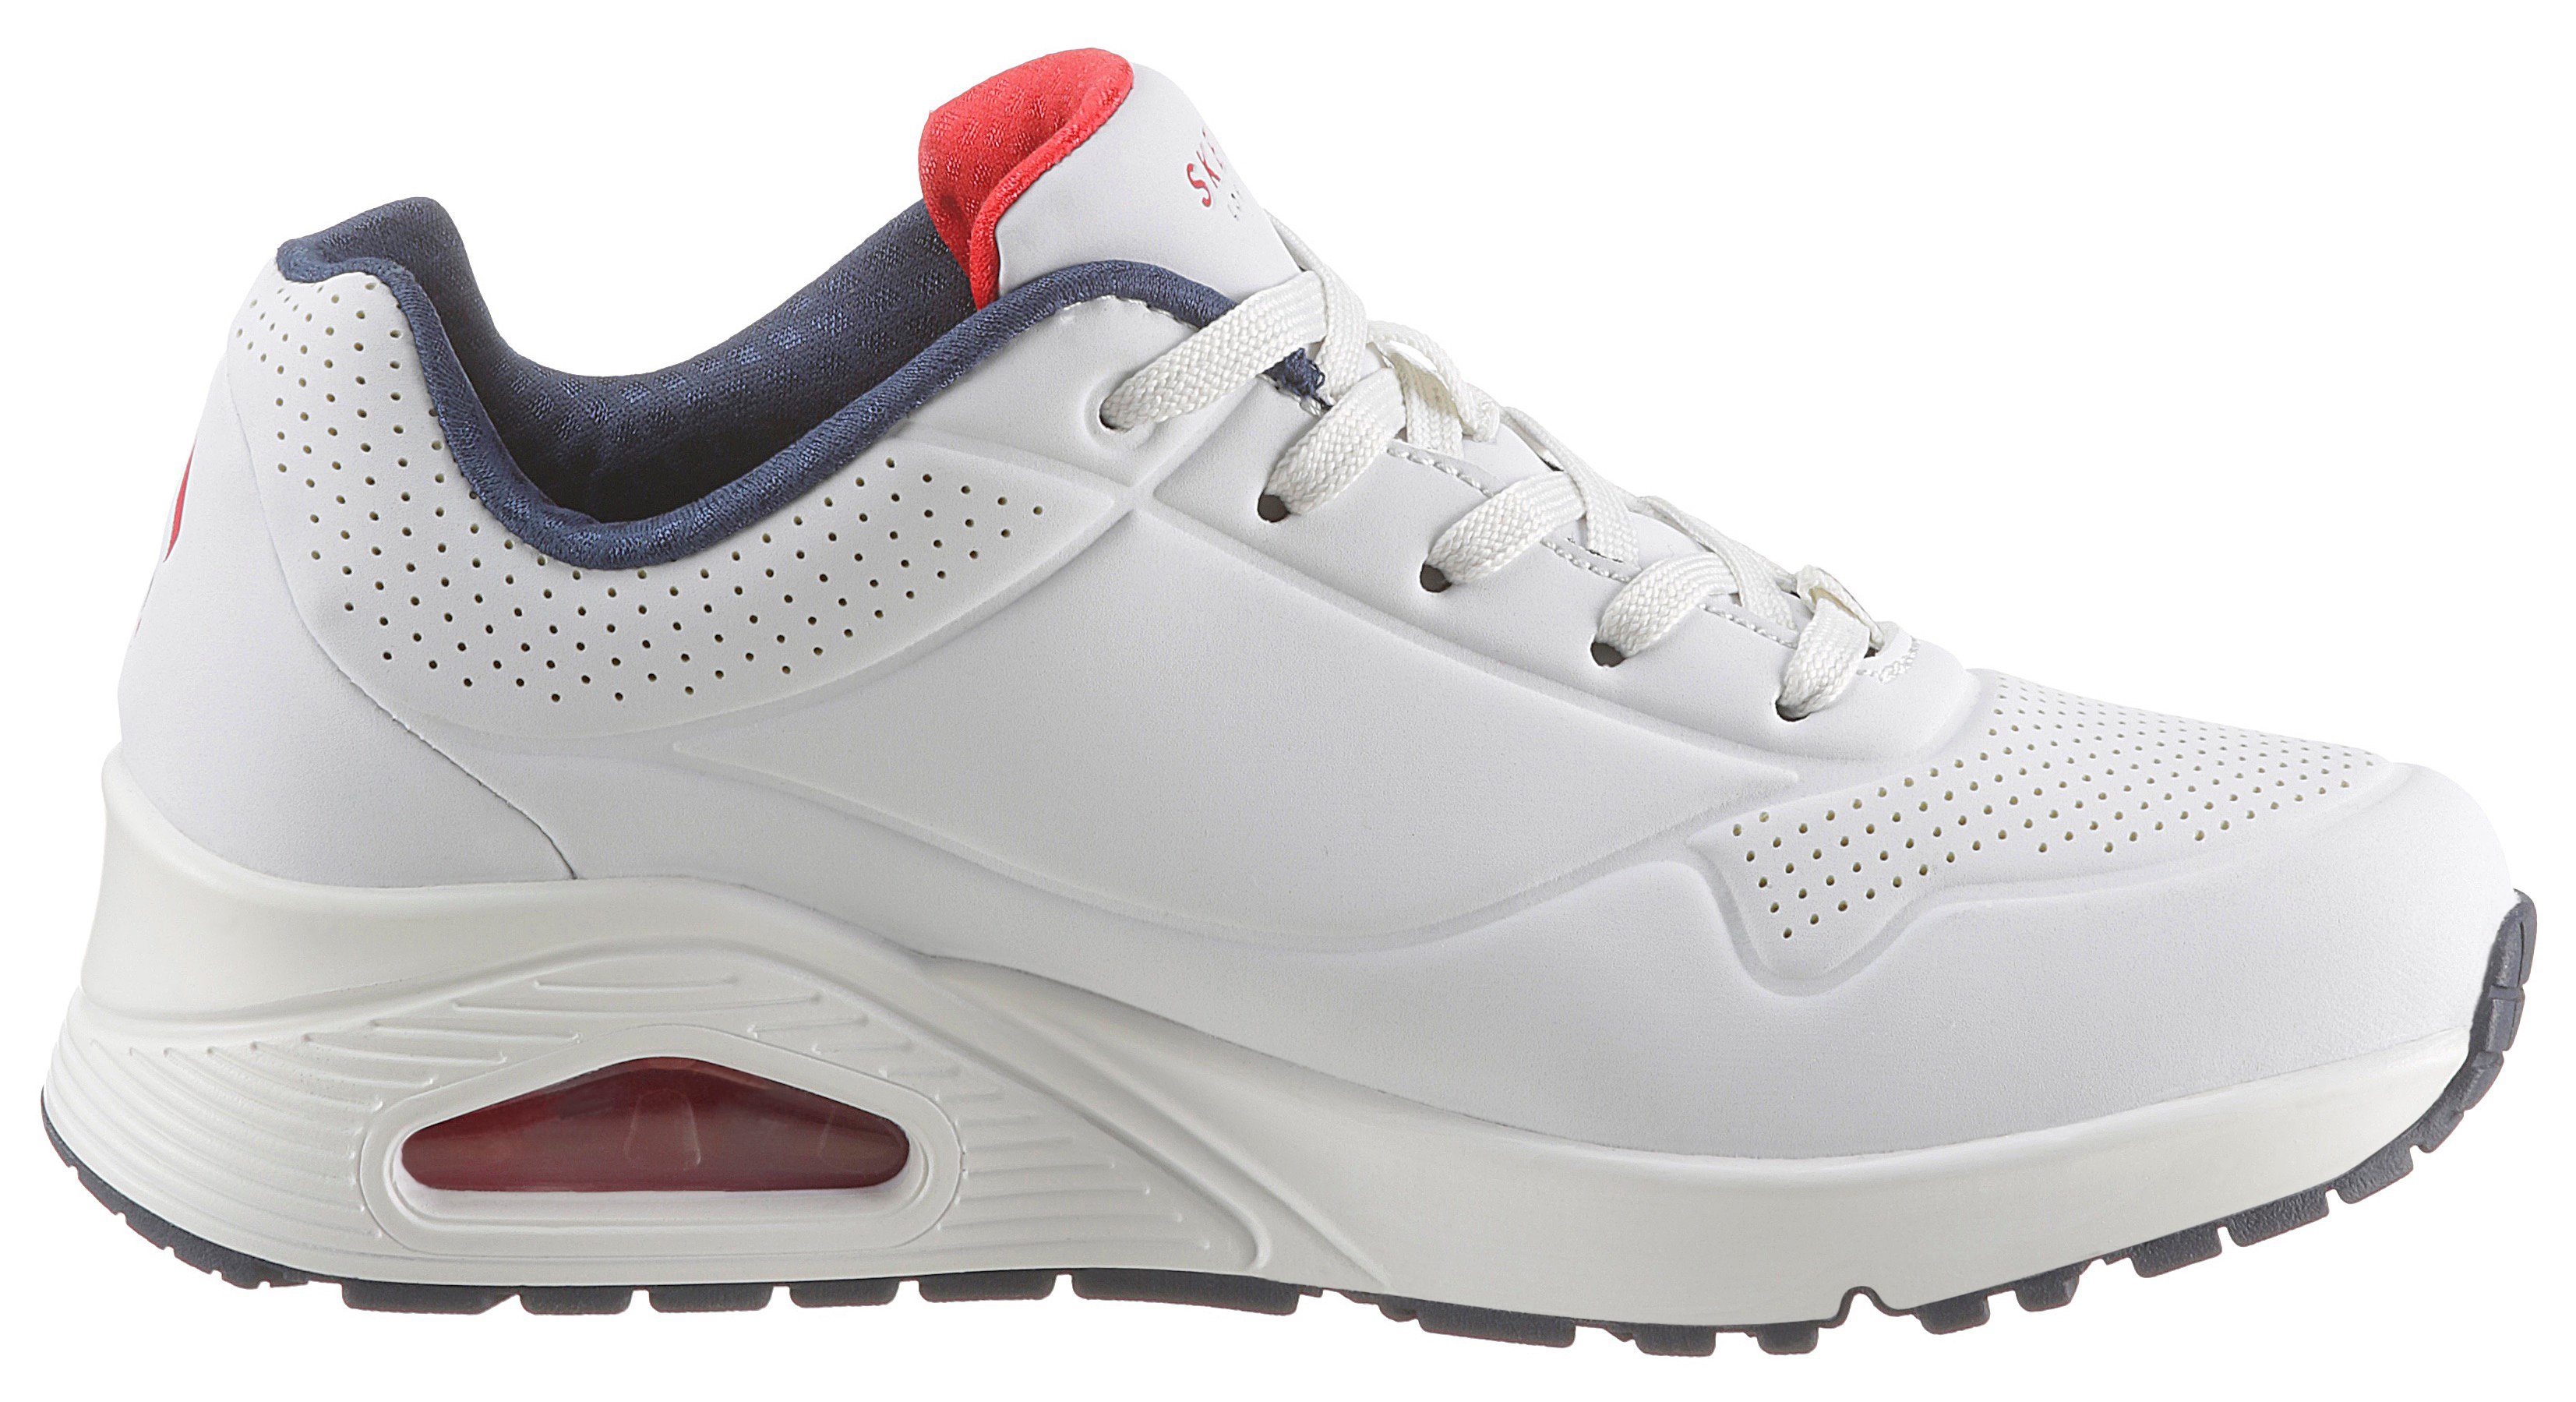 Stand feiner Wedgesneaker white Air Skechers - Uno Perforation on mit